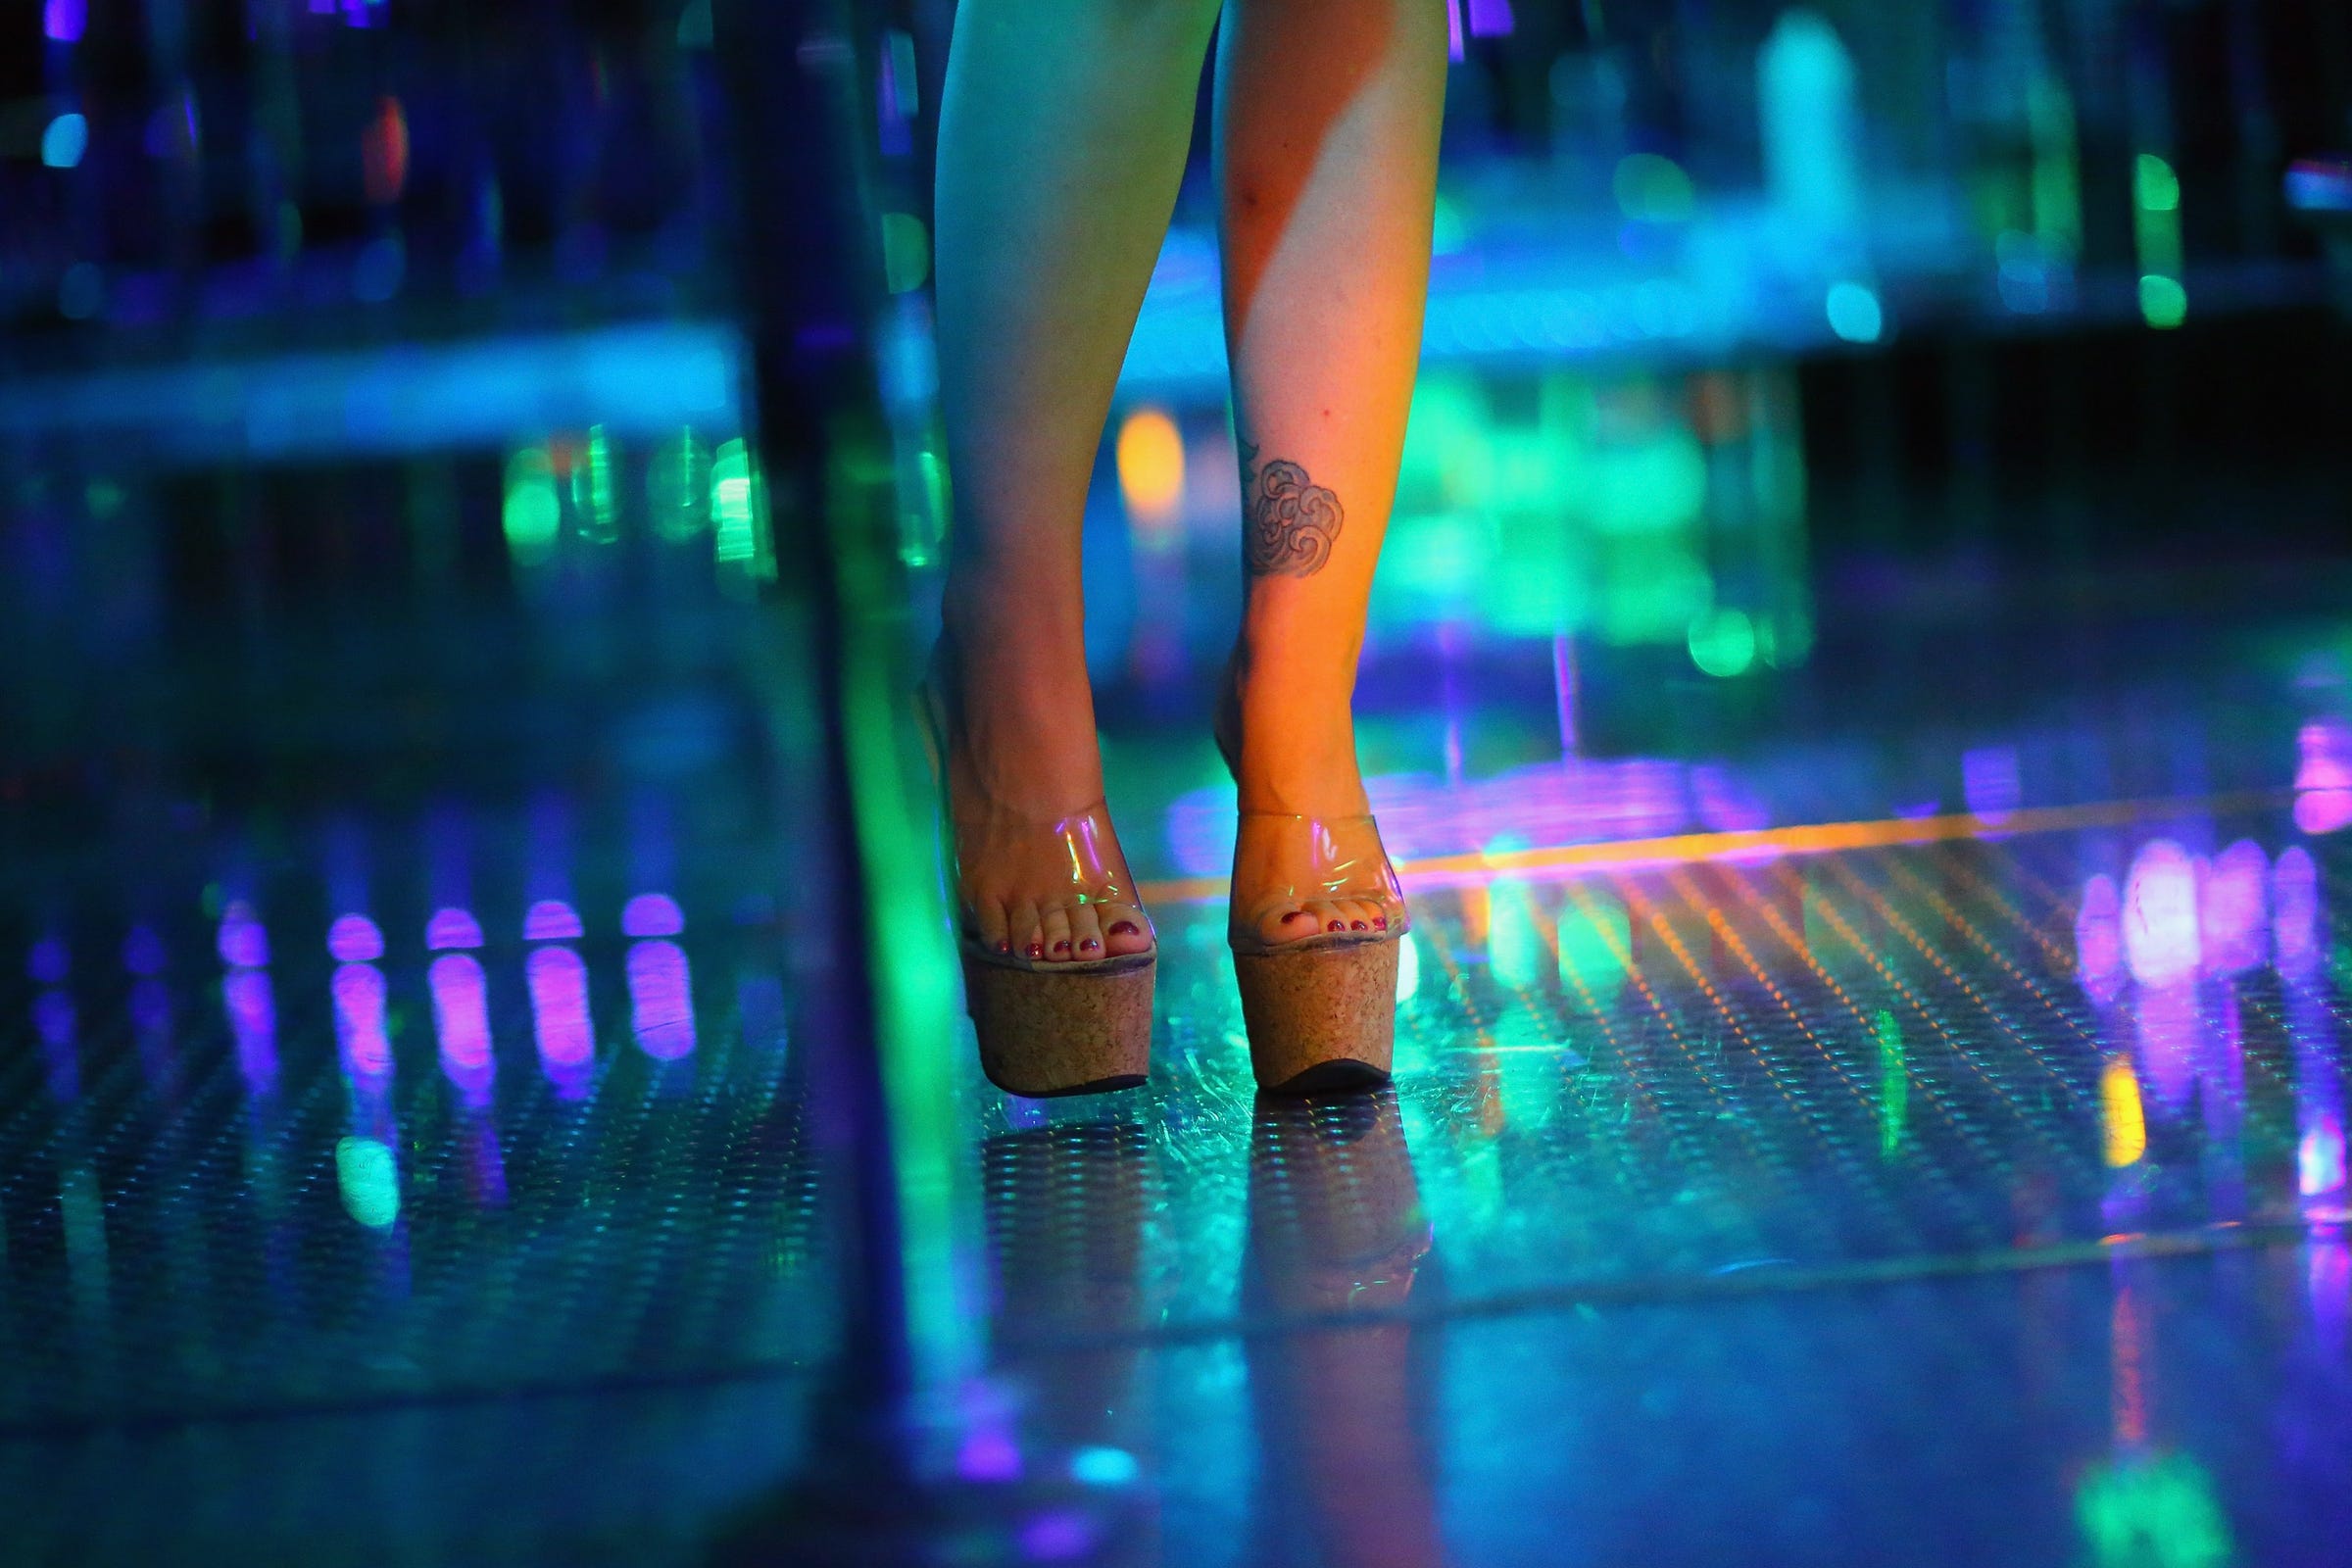 Midget woman having sex in the bar - Porno photo